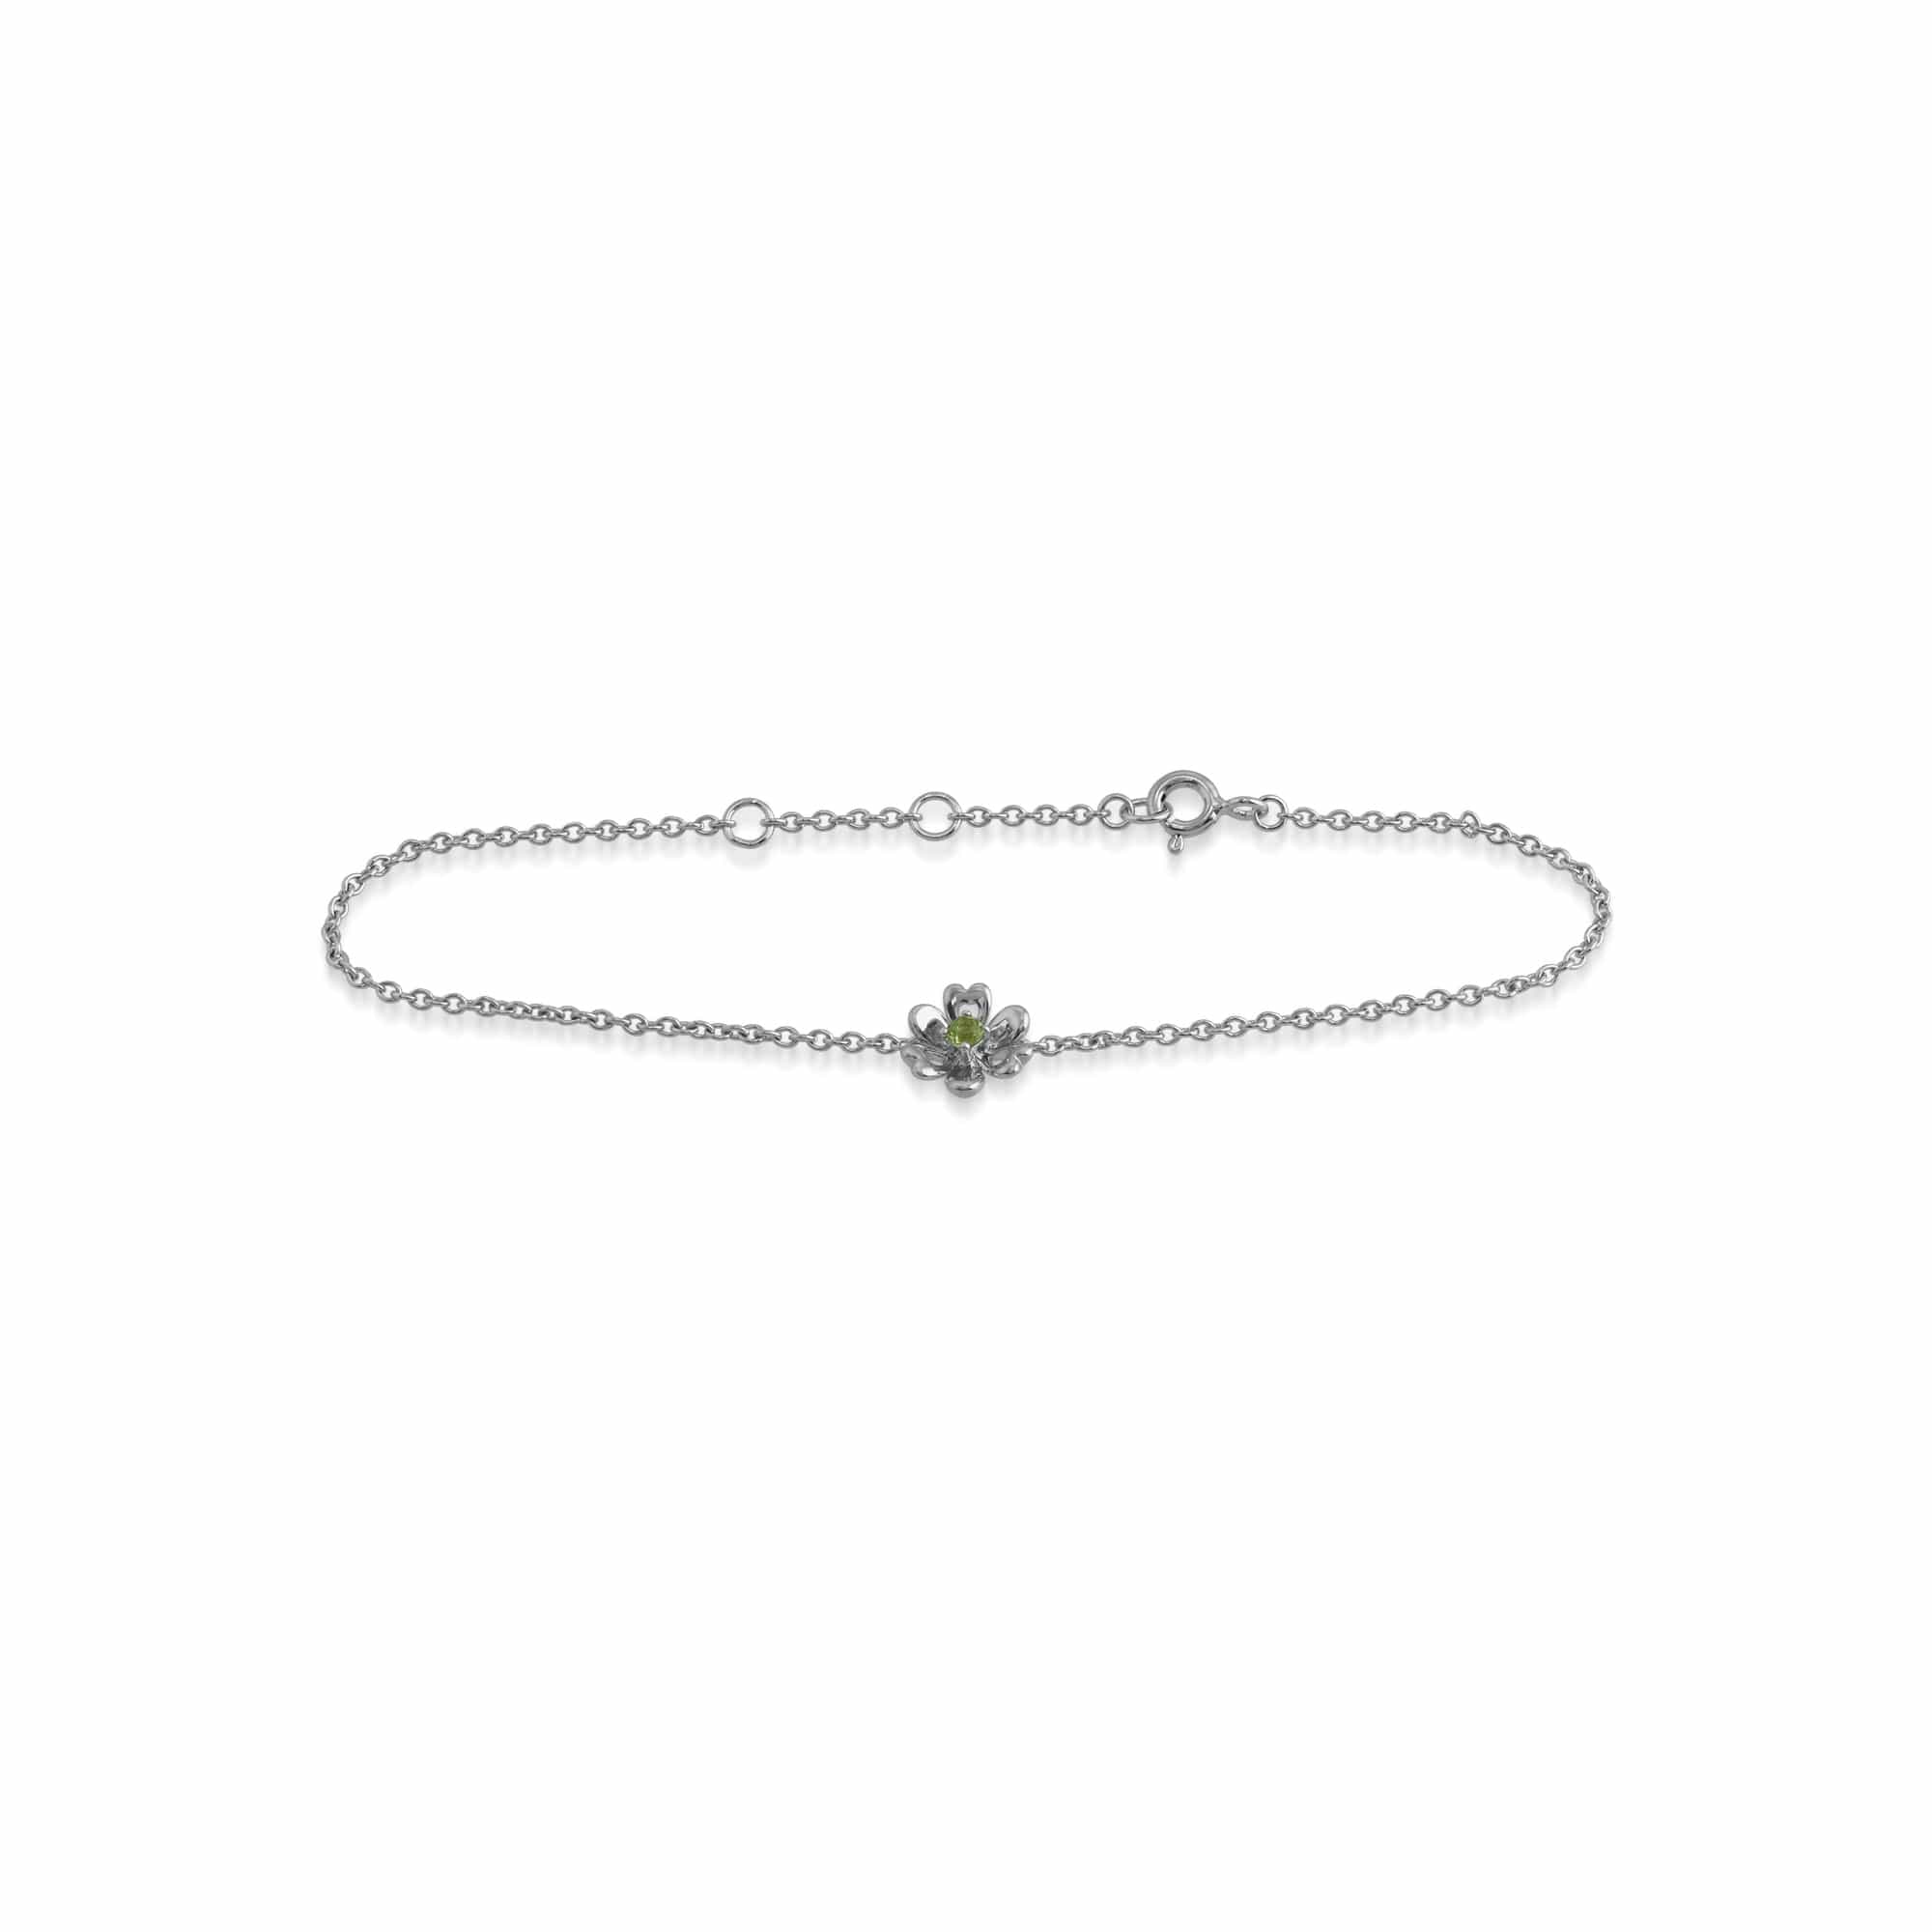 Floral Round Peridot Flower Single Stone Bracelet in 925 Sterling Silver - Gemondo